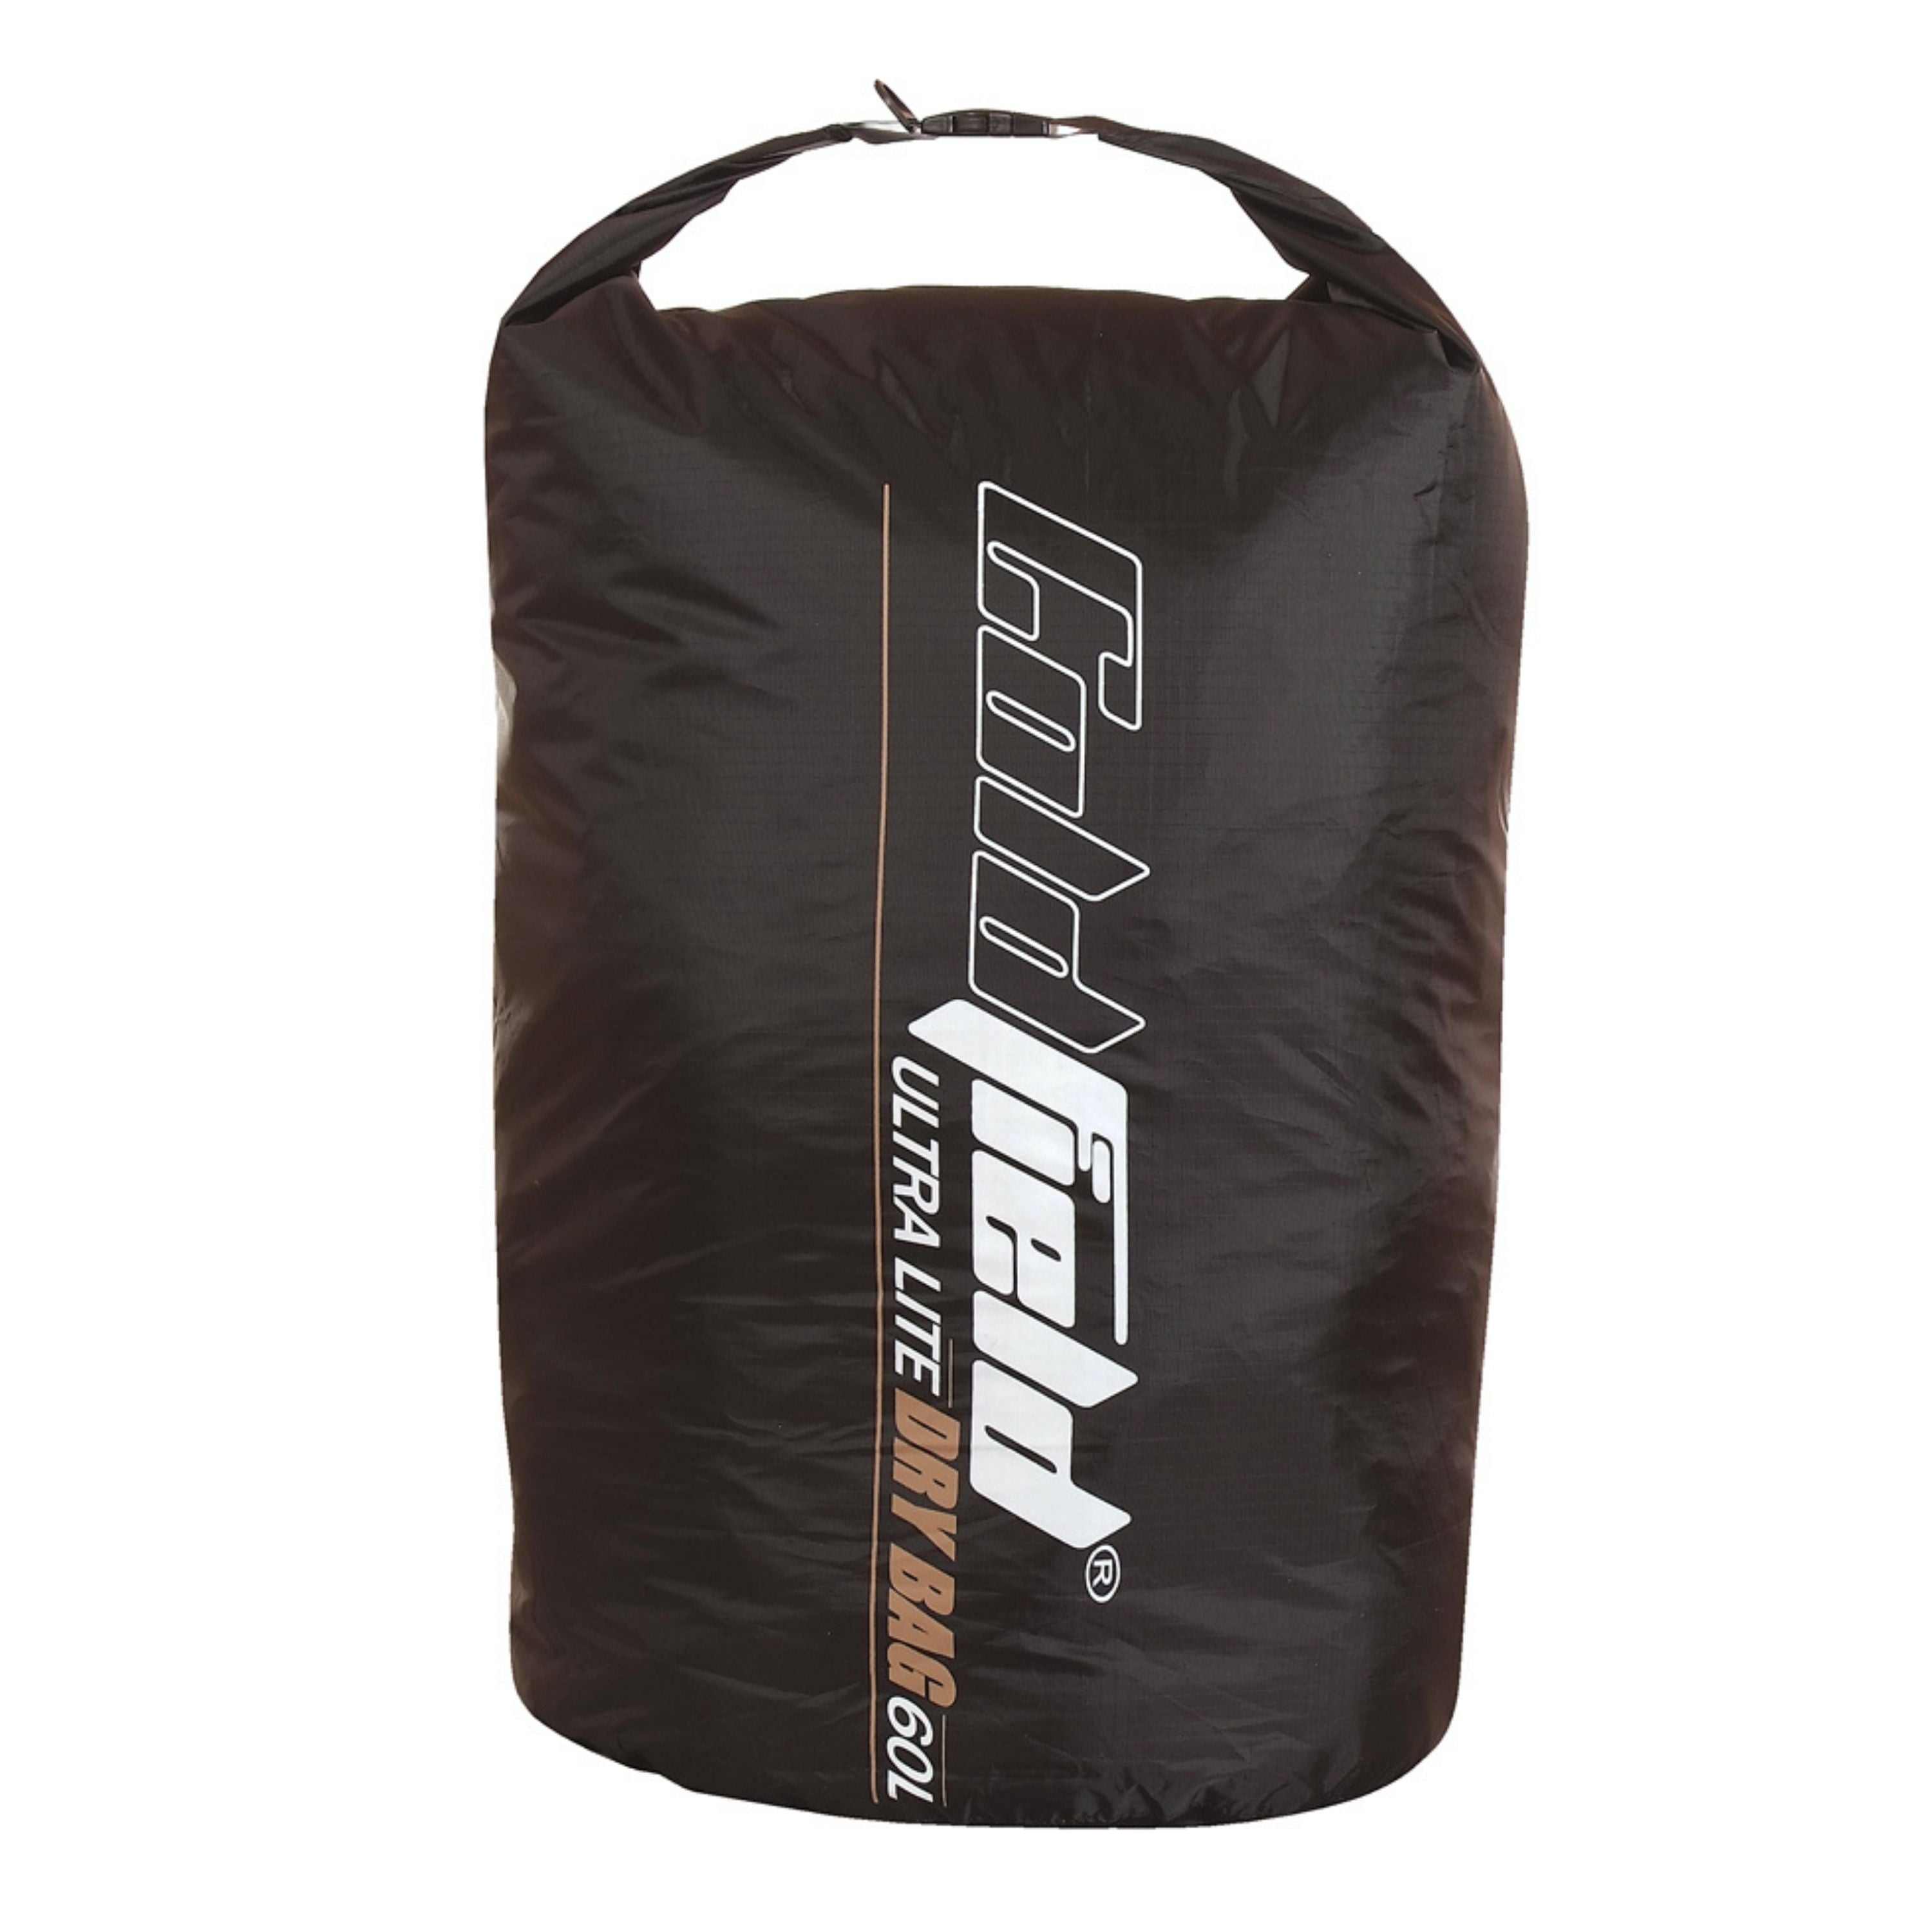 Ultra light dry bag - 60 L